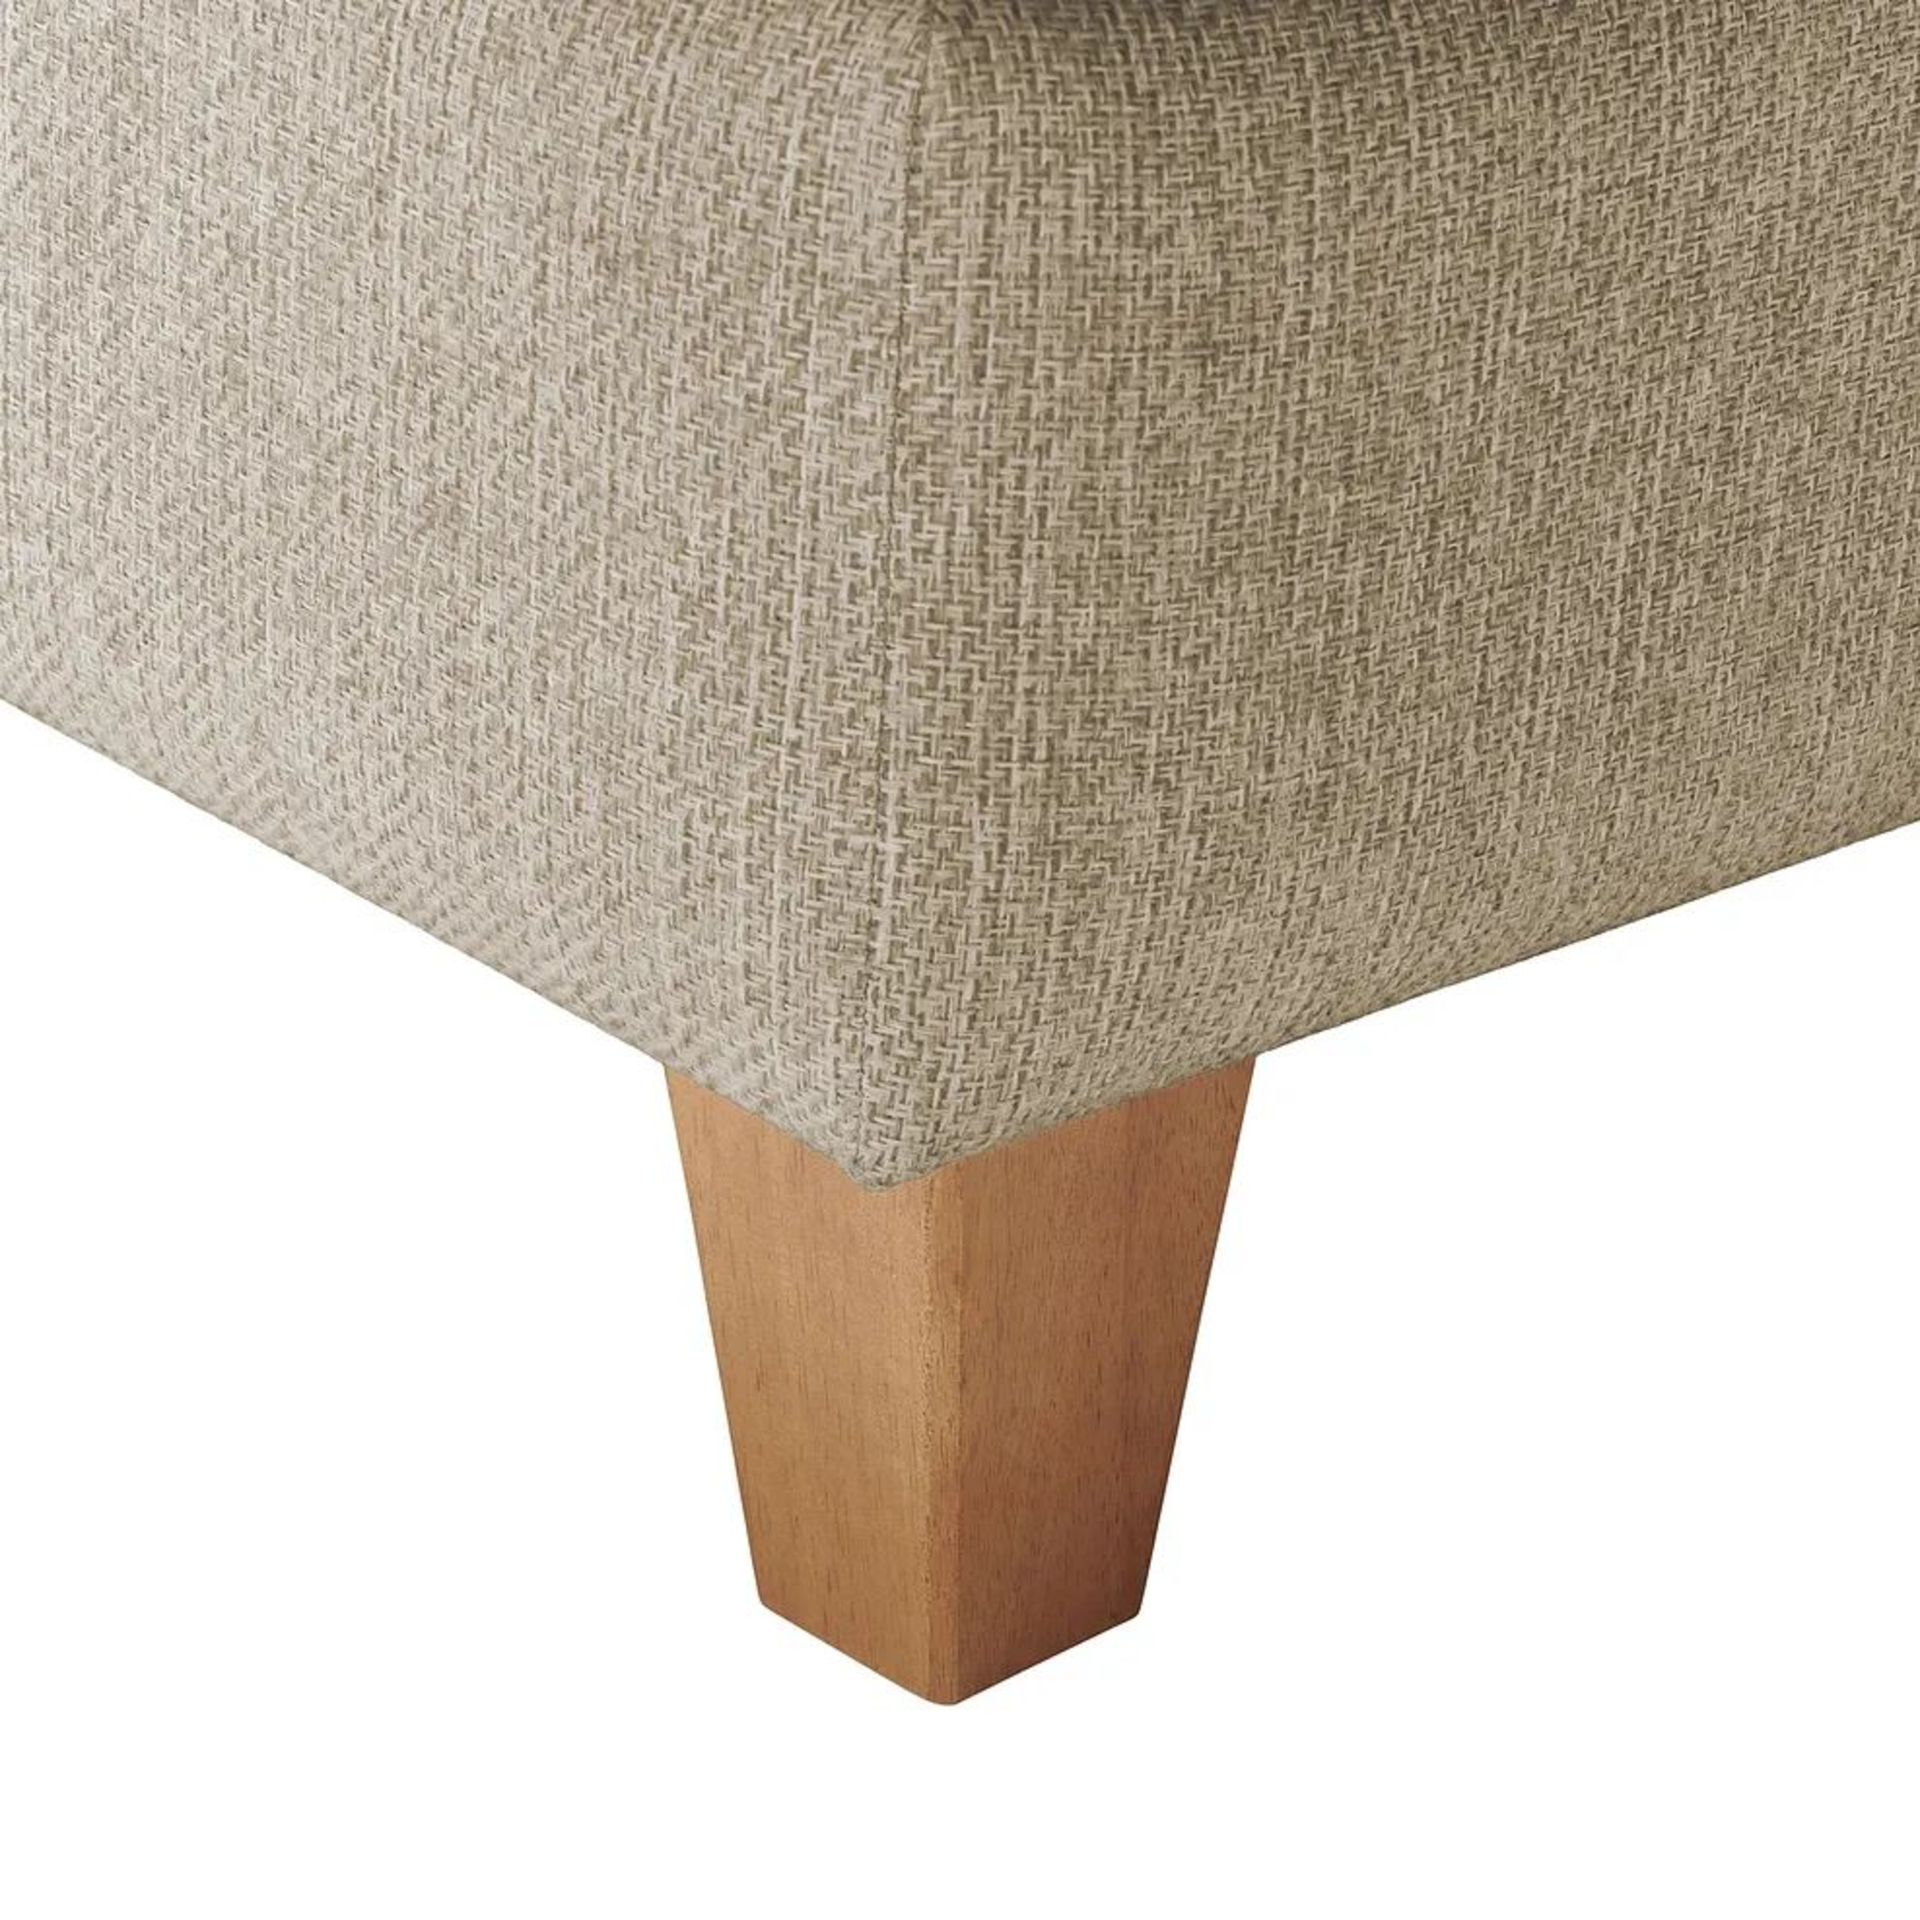 BRAND NEW INCA Large Storage Footstool - BEIGE FABRIC. RRP £529. Our large Inca storage footstool is - Image 4 of 5